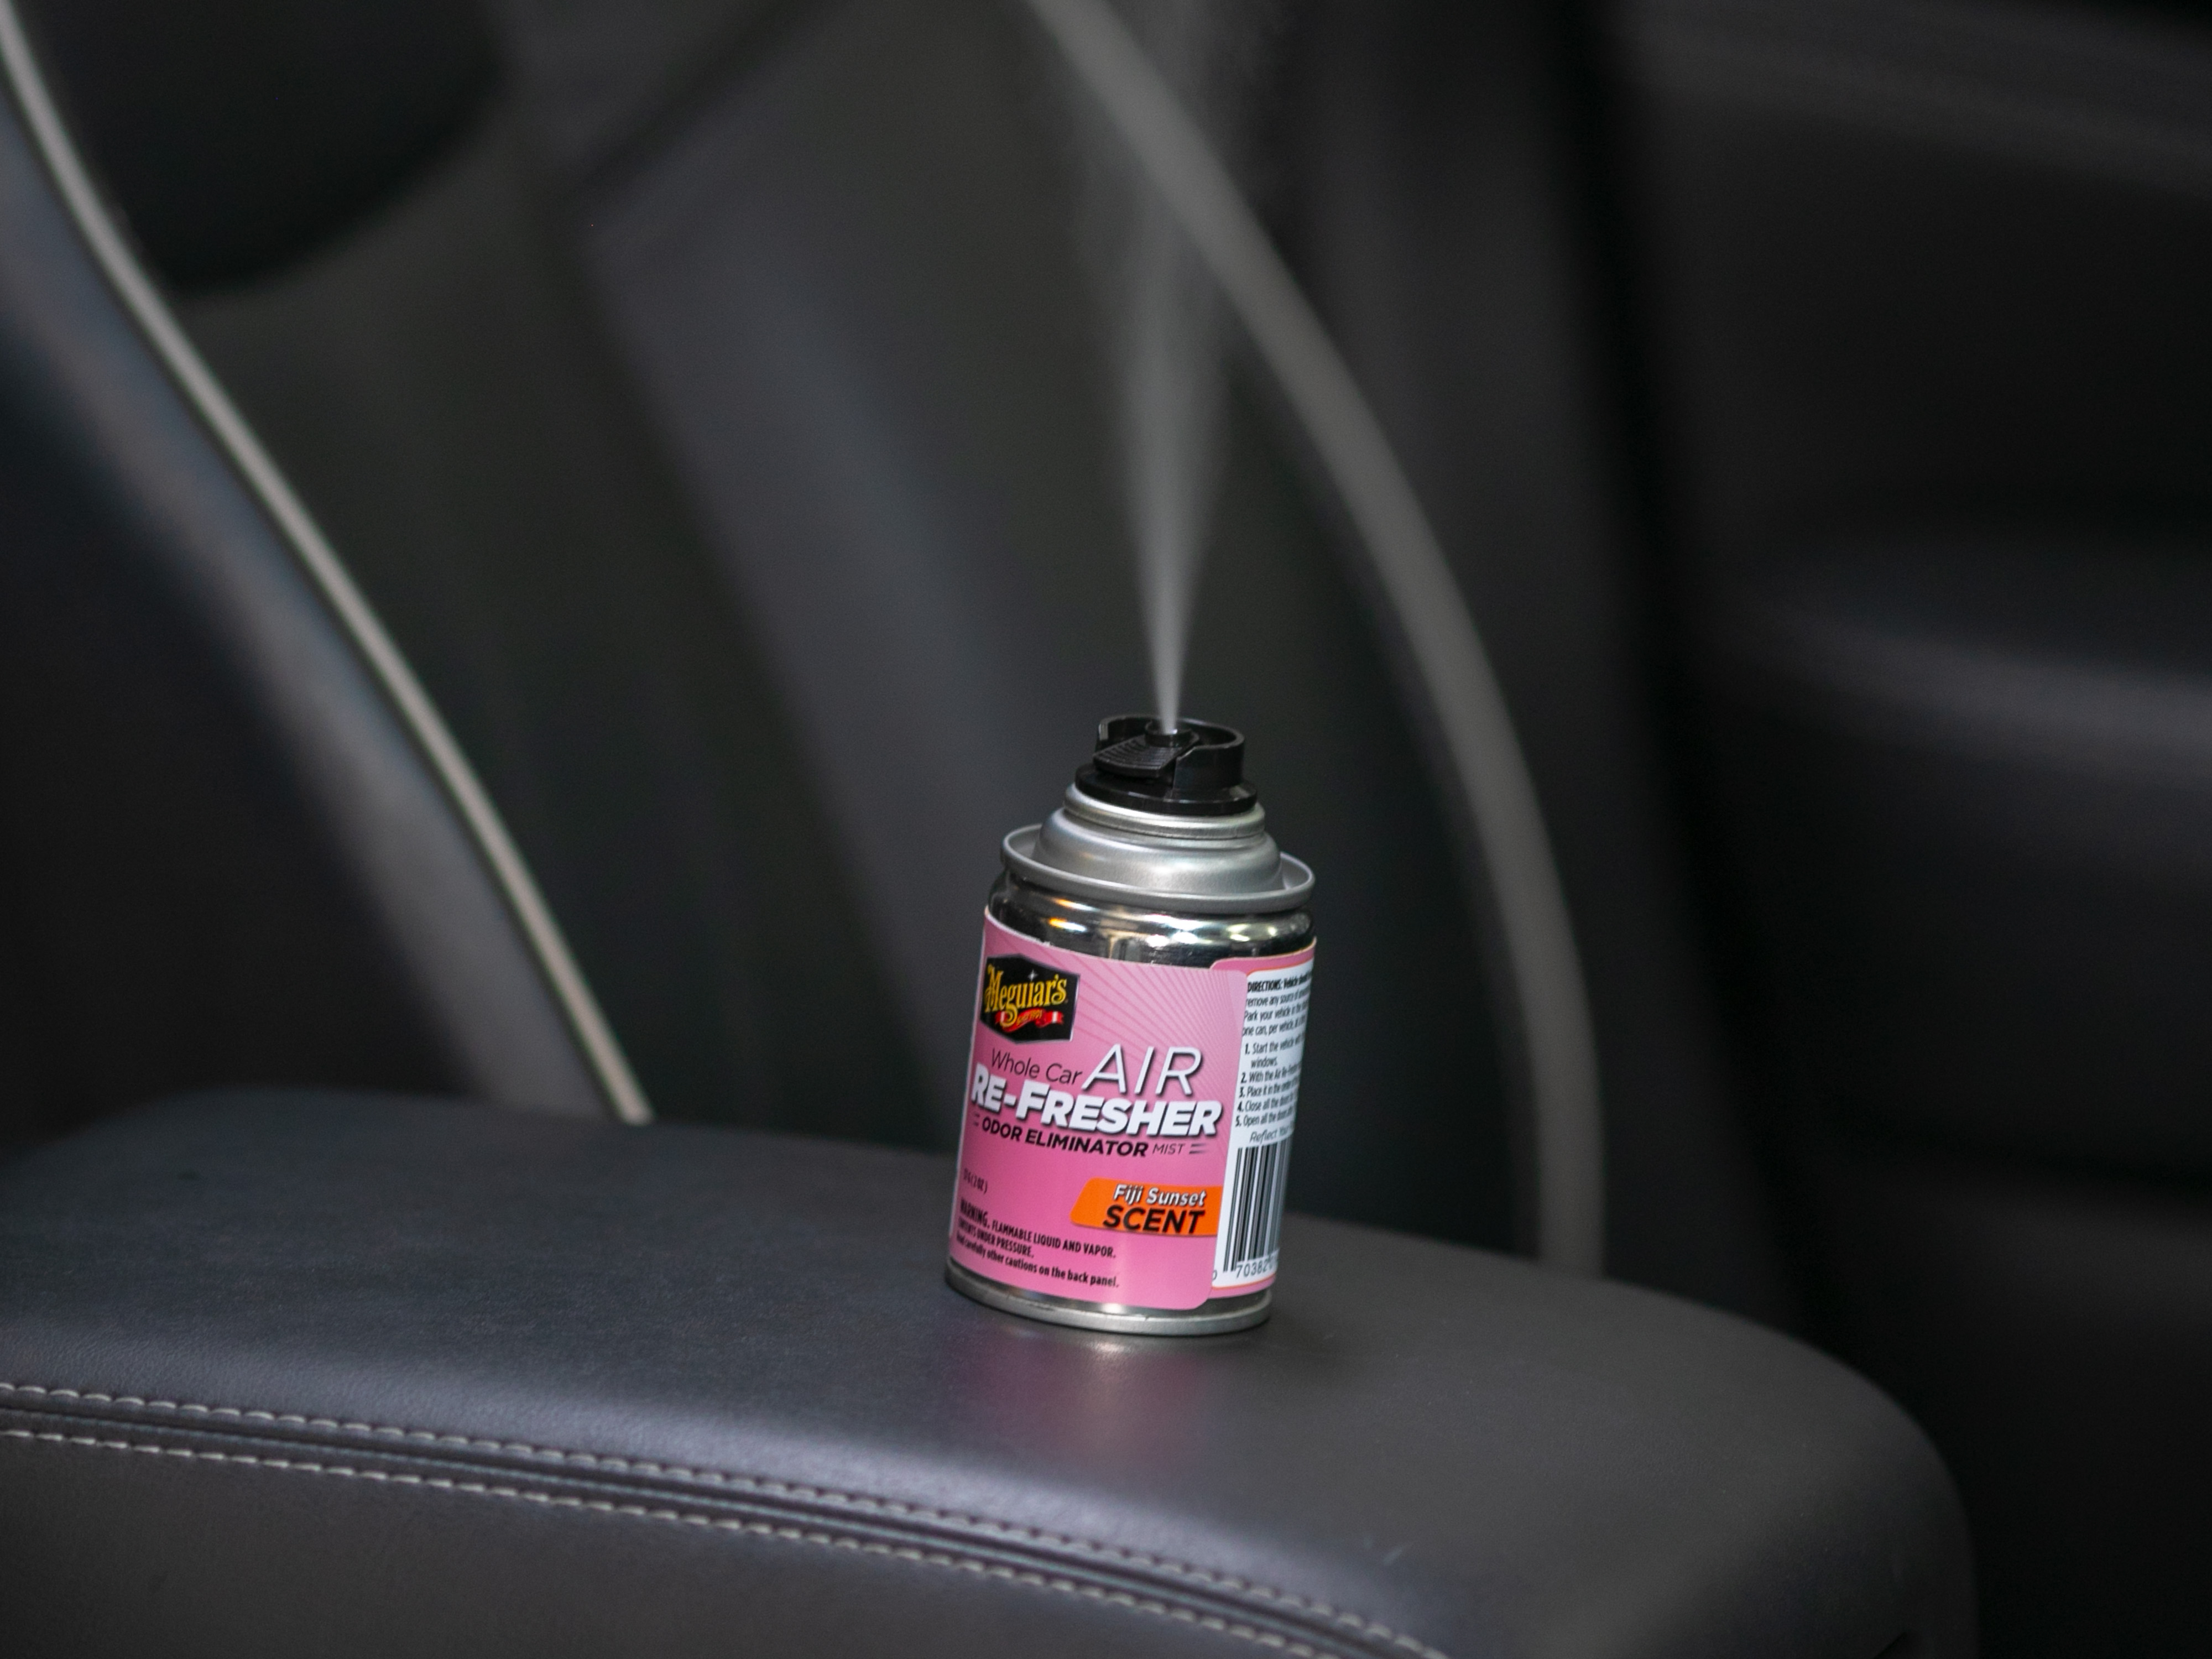  Meguiar's Whole Car Air Refresher, Odor Eliminator Spray  Eliminates Strong Vehicle Odors, New Car Scent – Three 2 Oz Spray Bottles :  Automotive